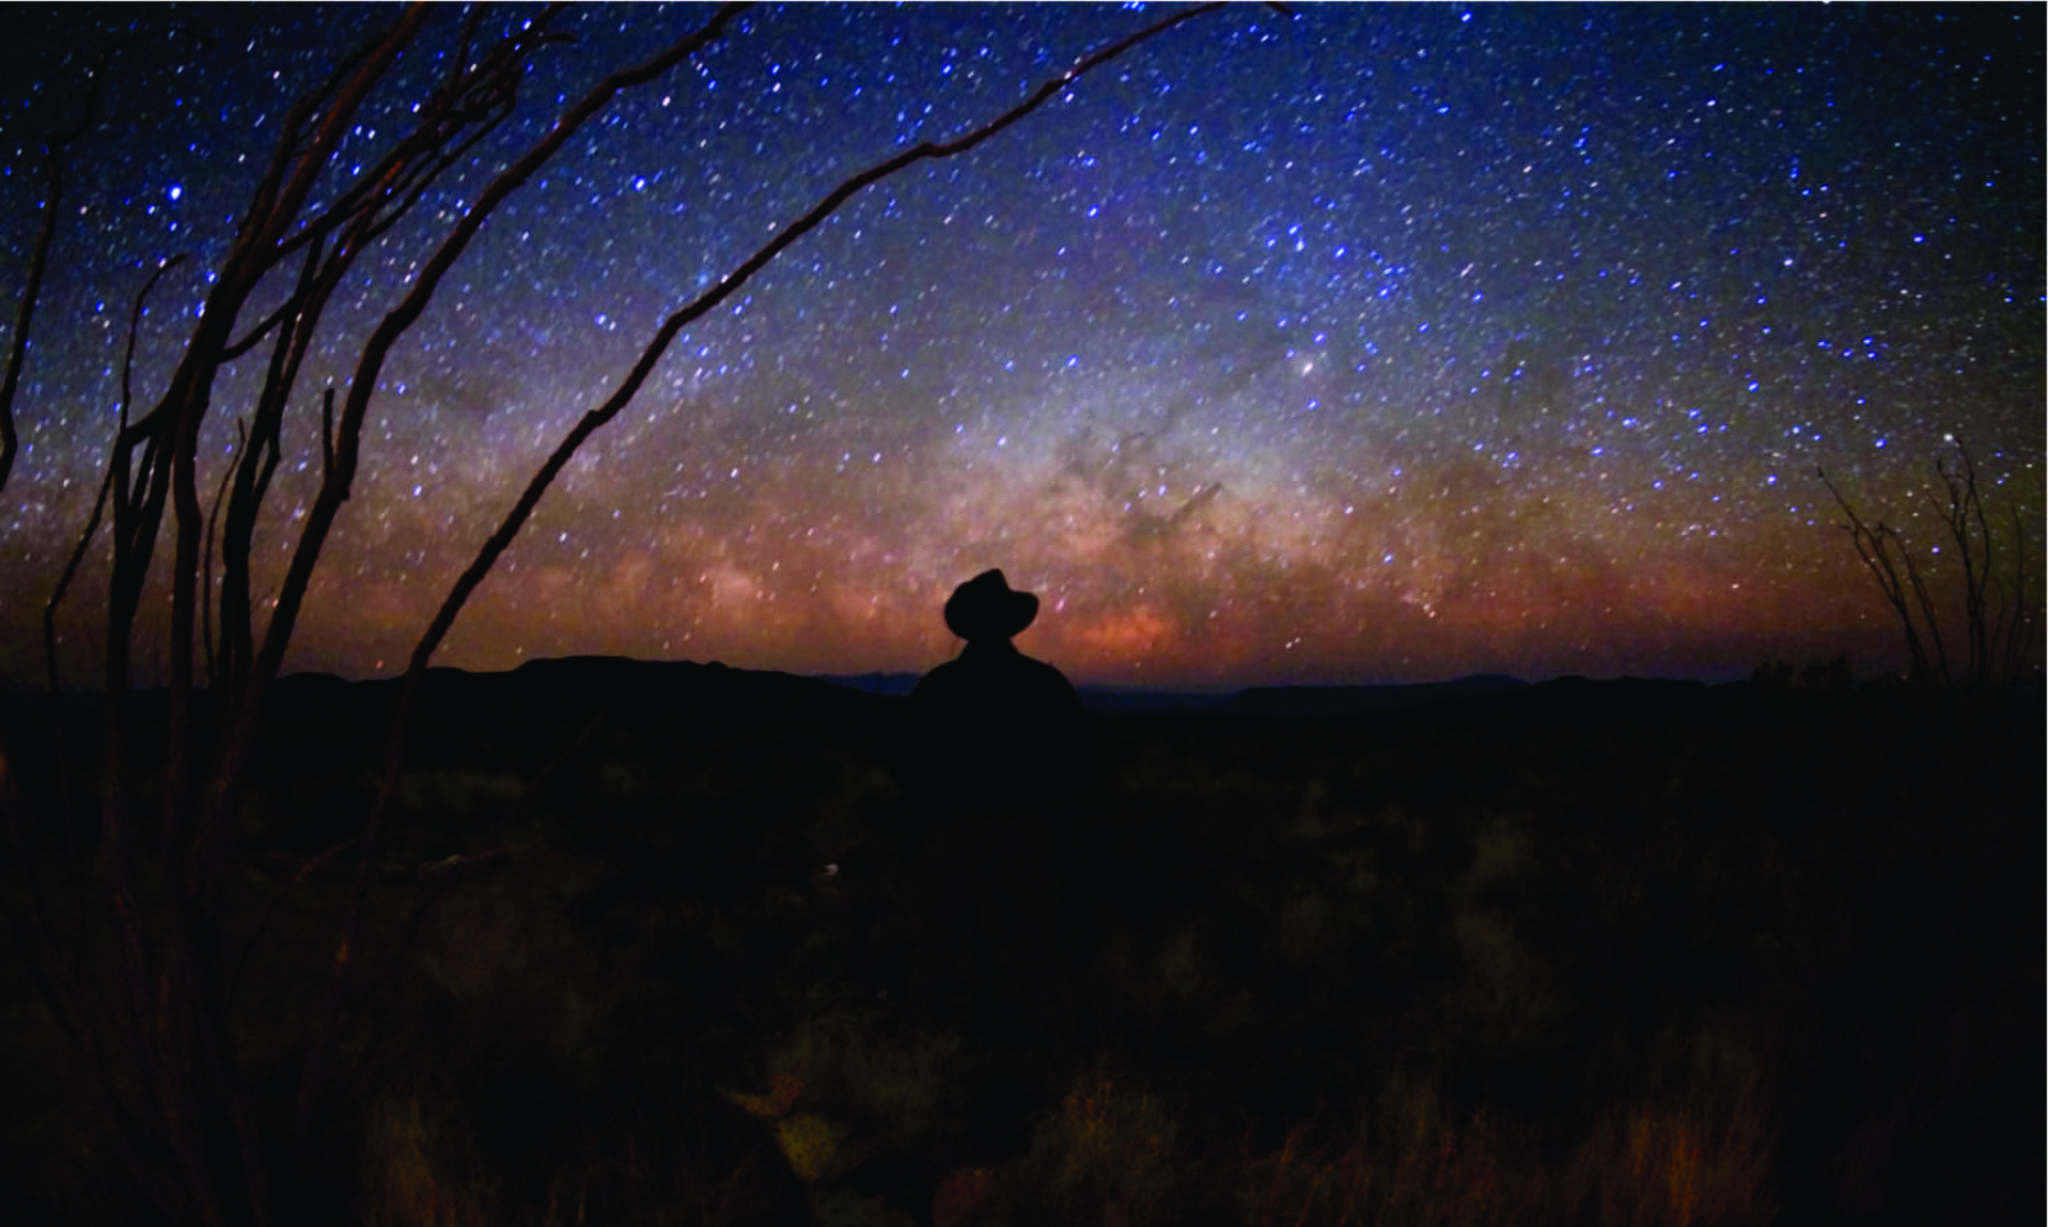 Texas Landscape Project - Big Bend night sky